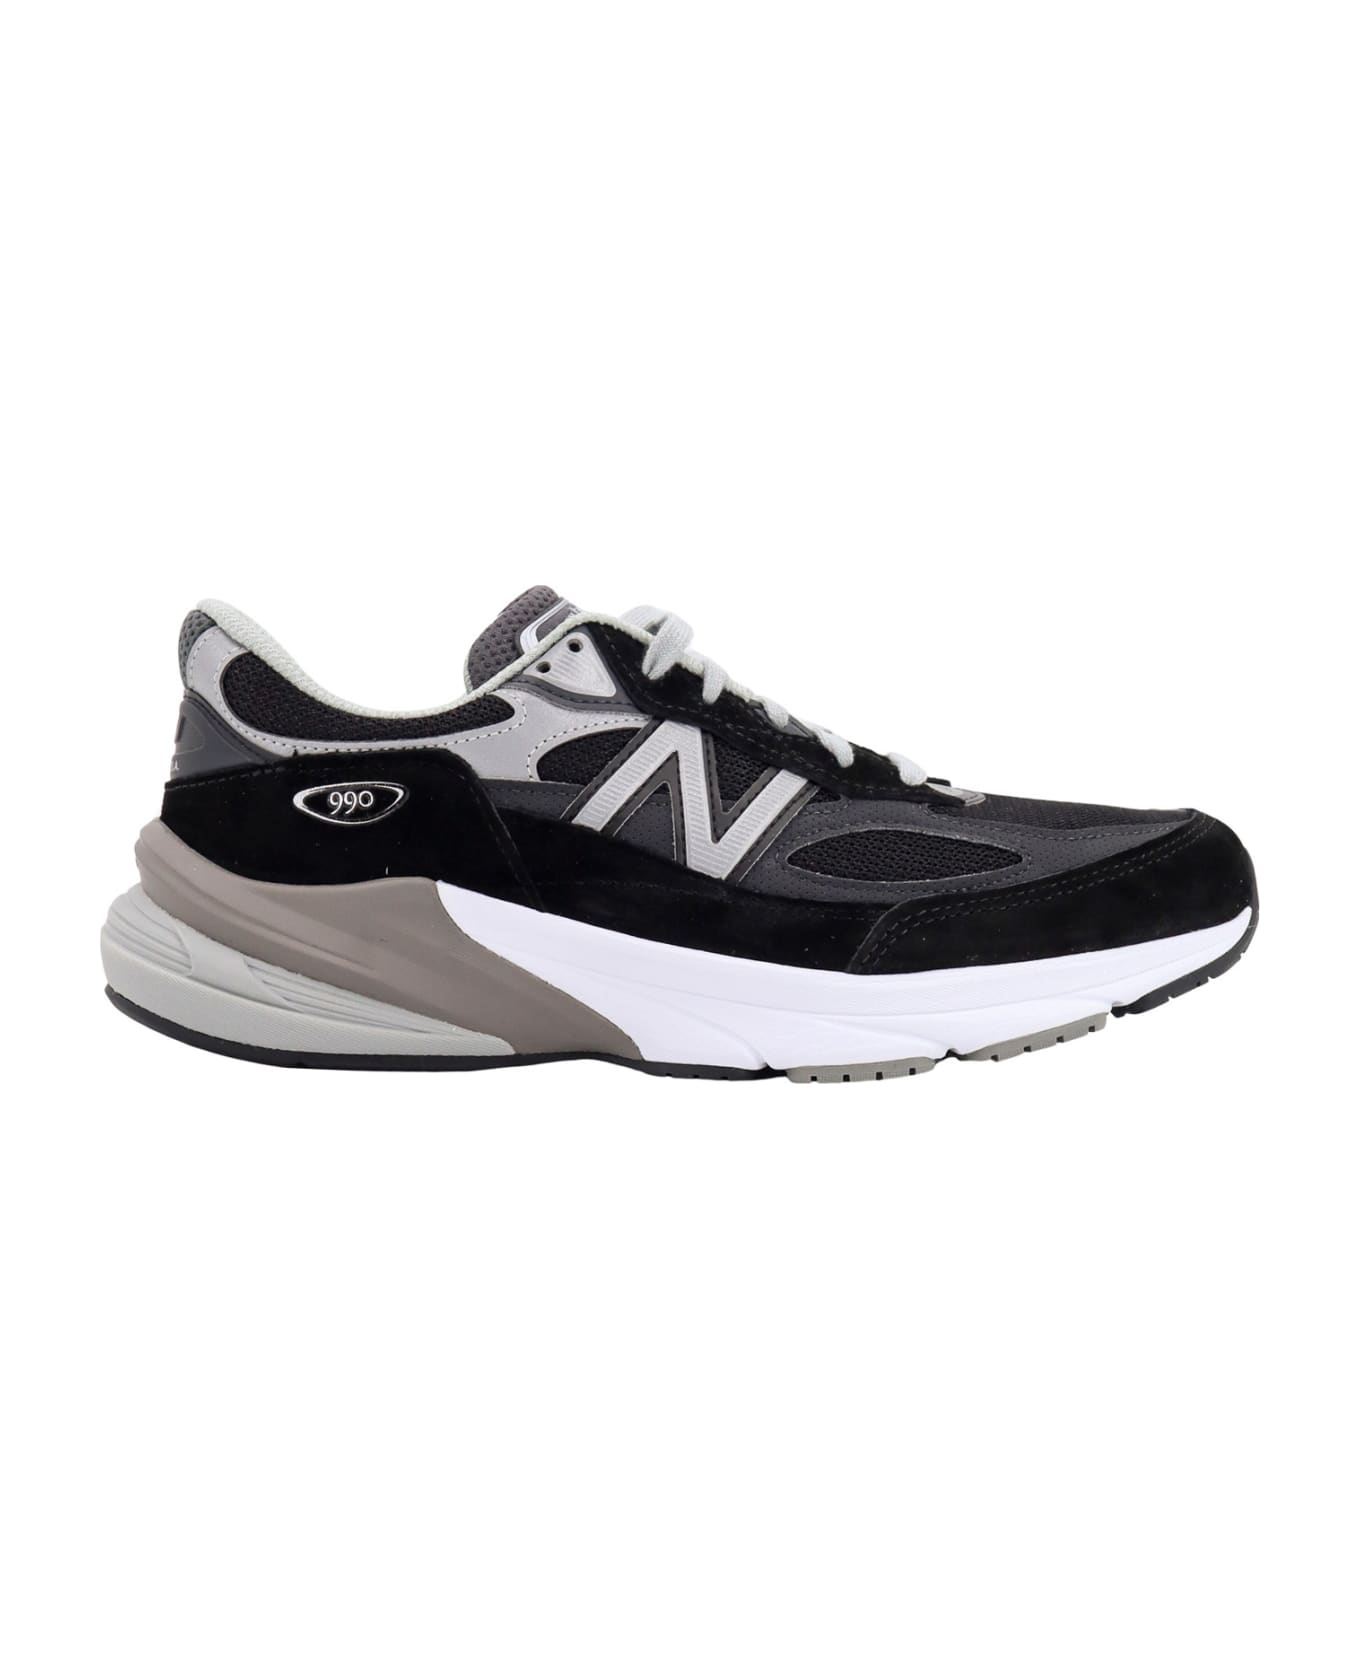 New Balance 990 Sneakers - Black